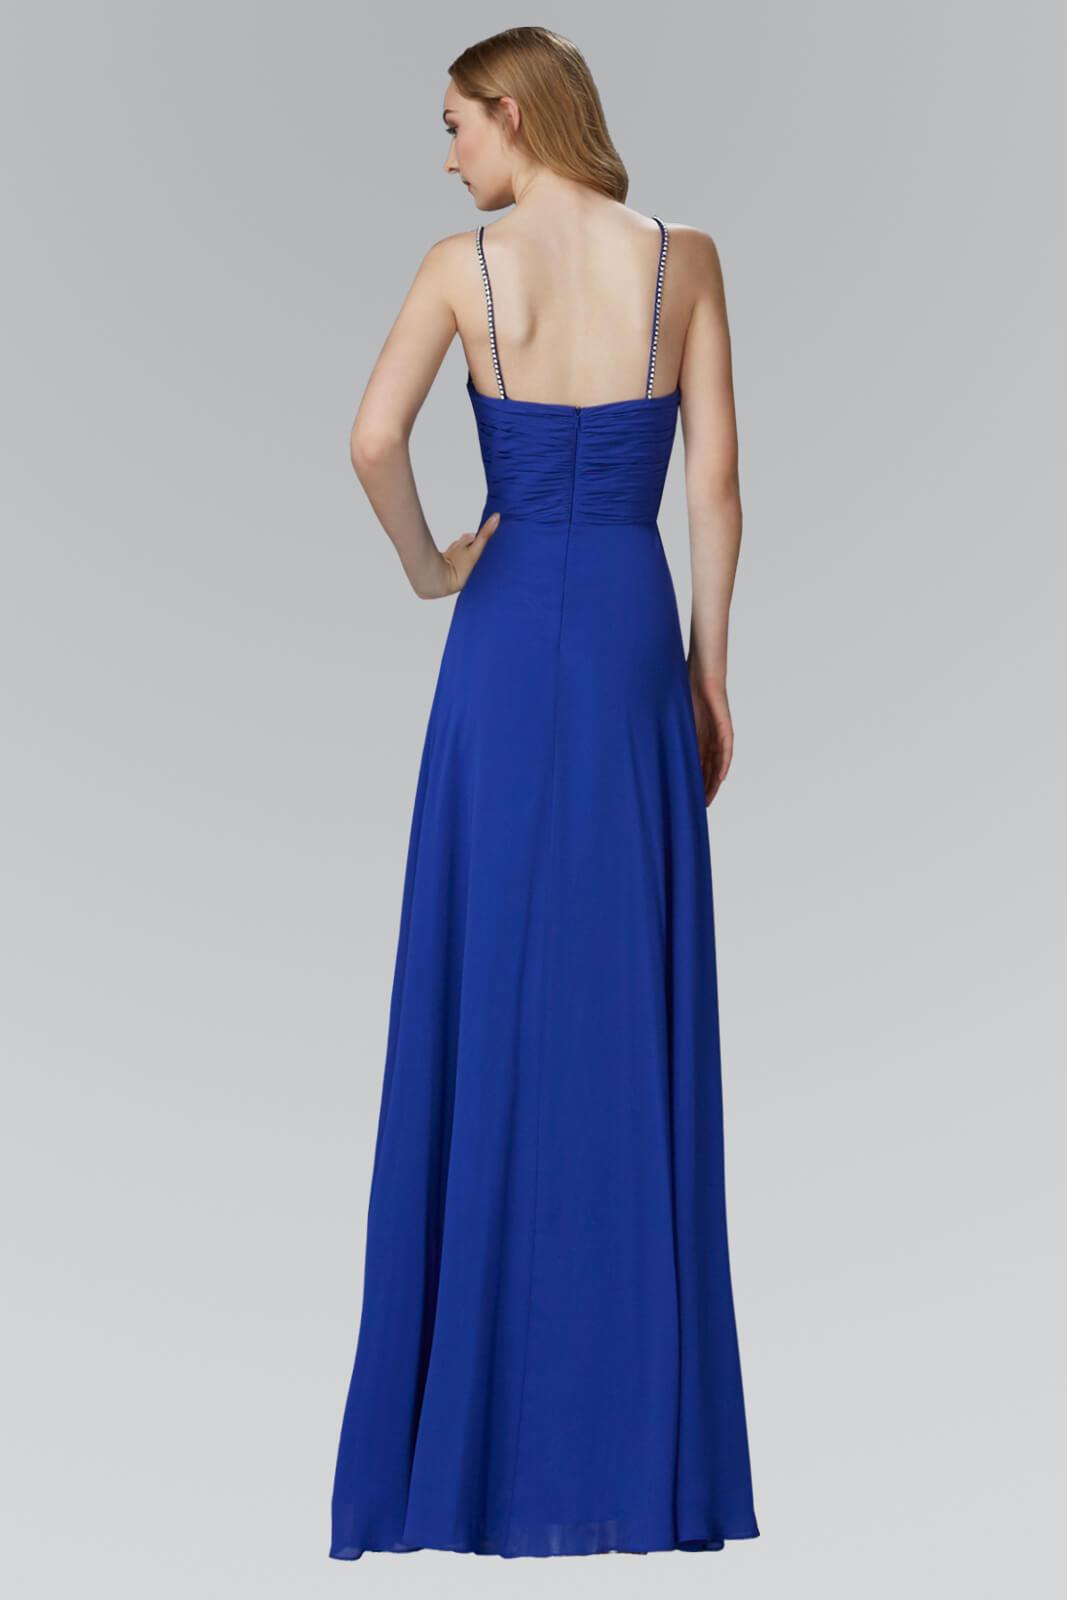 Prom Long Chiffon Spaghetti Straps Evening Formal Dress - The Dress Outlet Elizabeth K